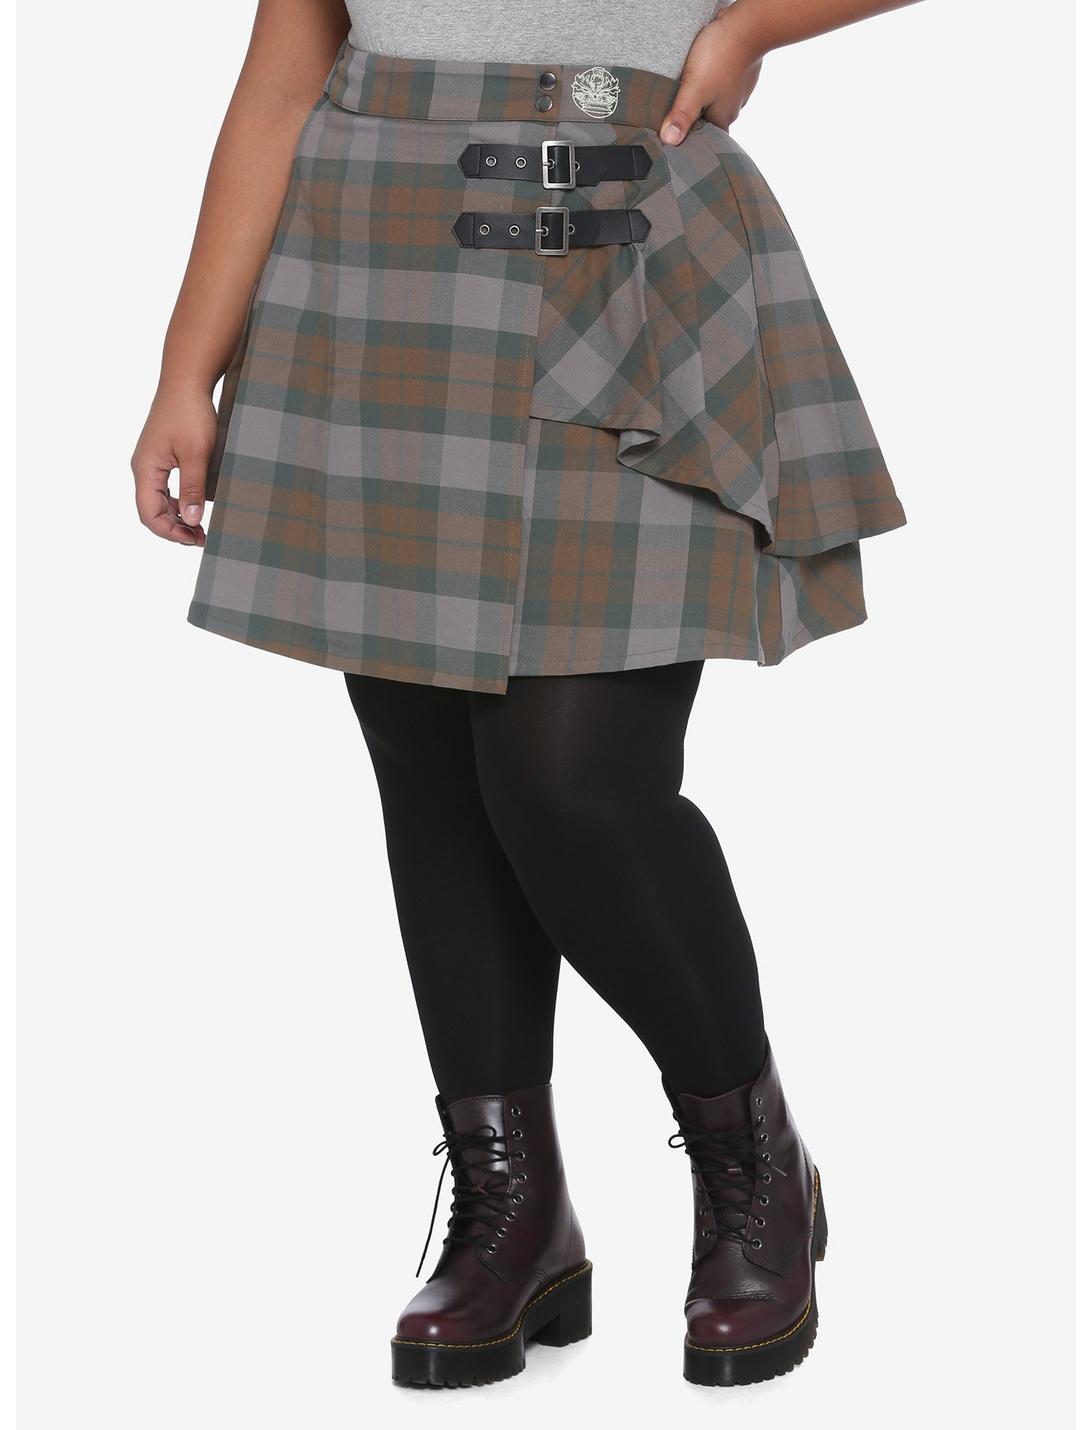 Outlander Tartan Buckle Skirt Plus Size, MULTI, hi-res